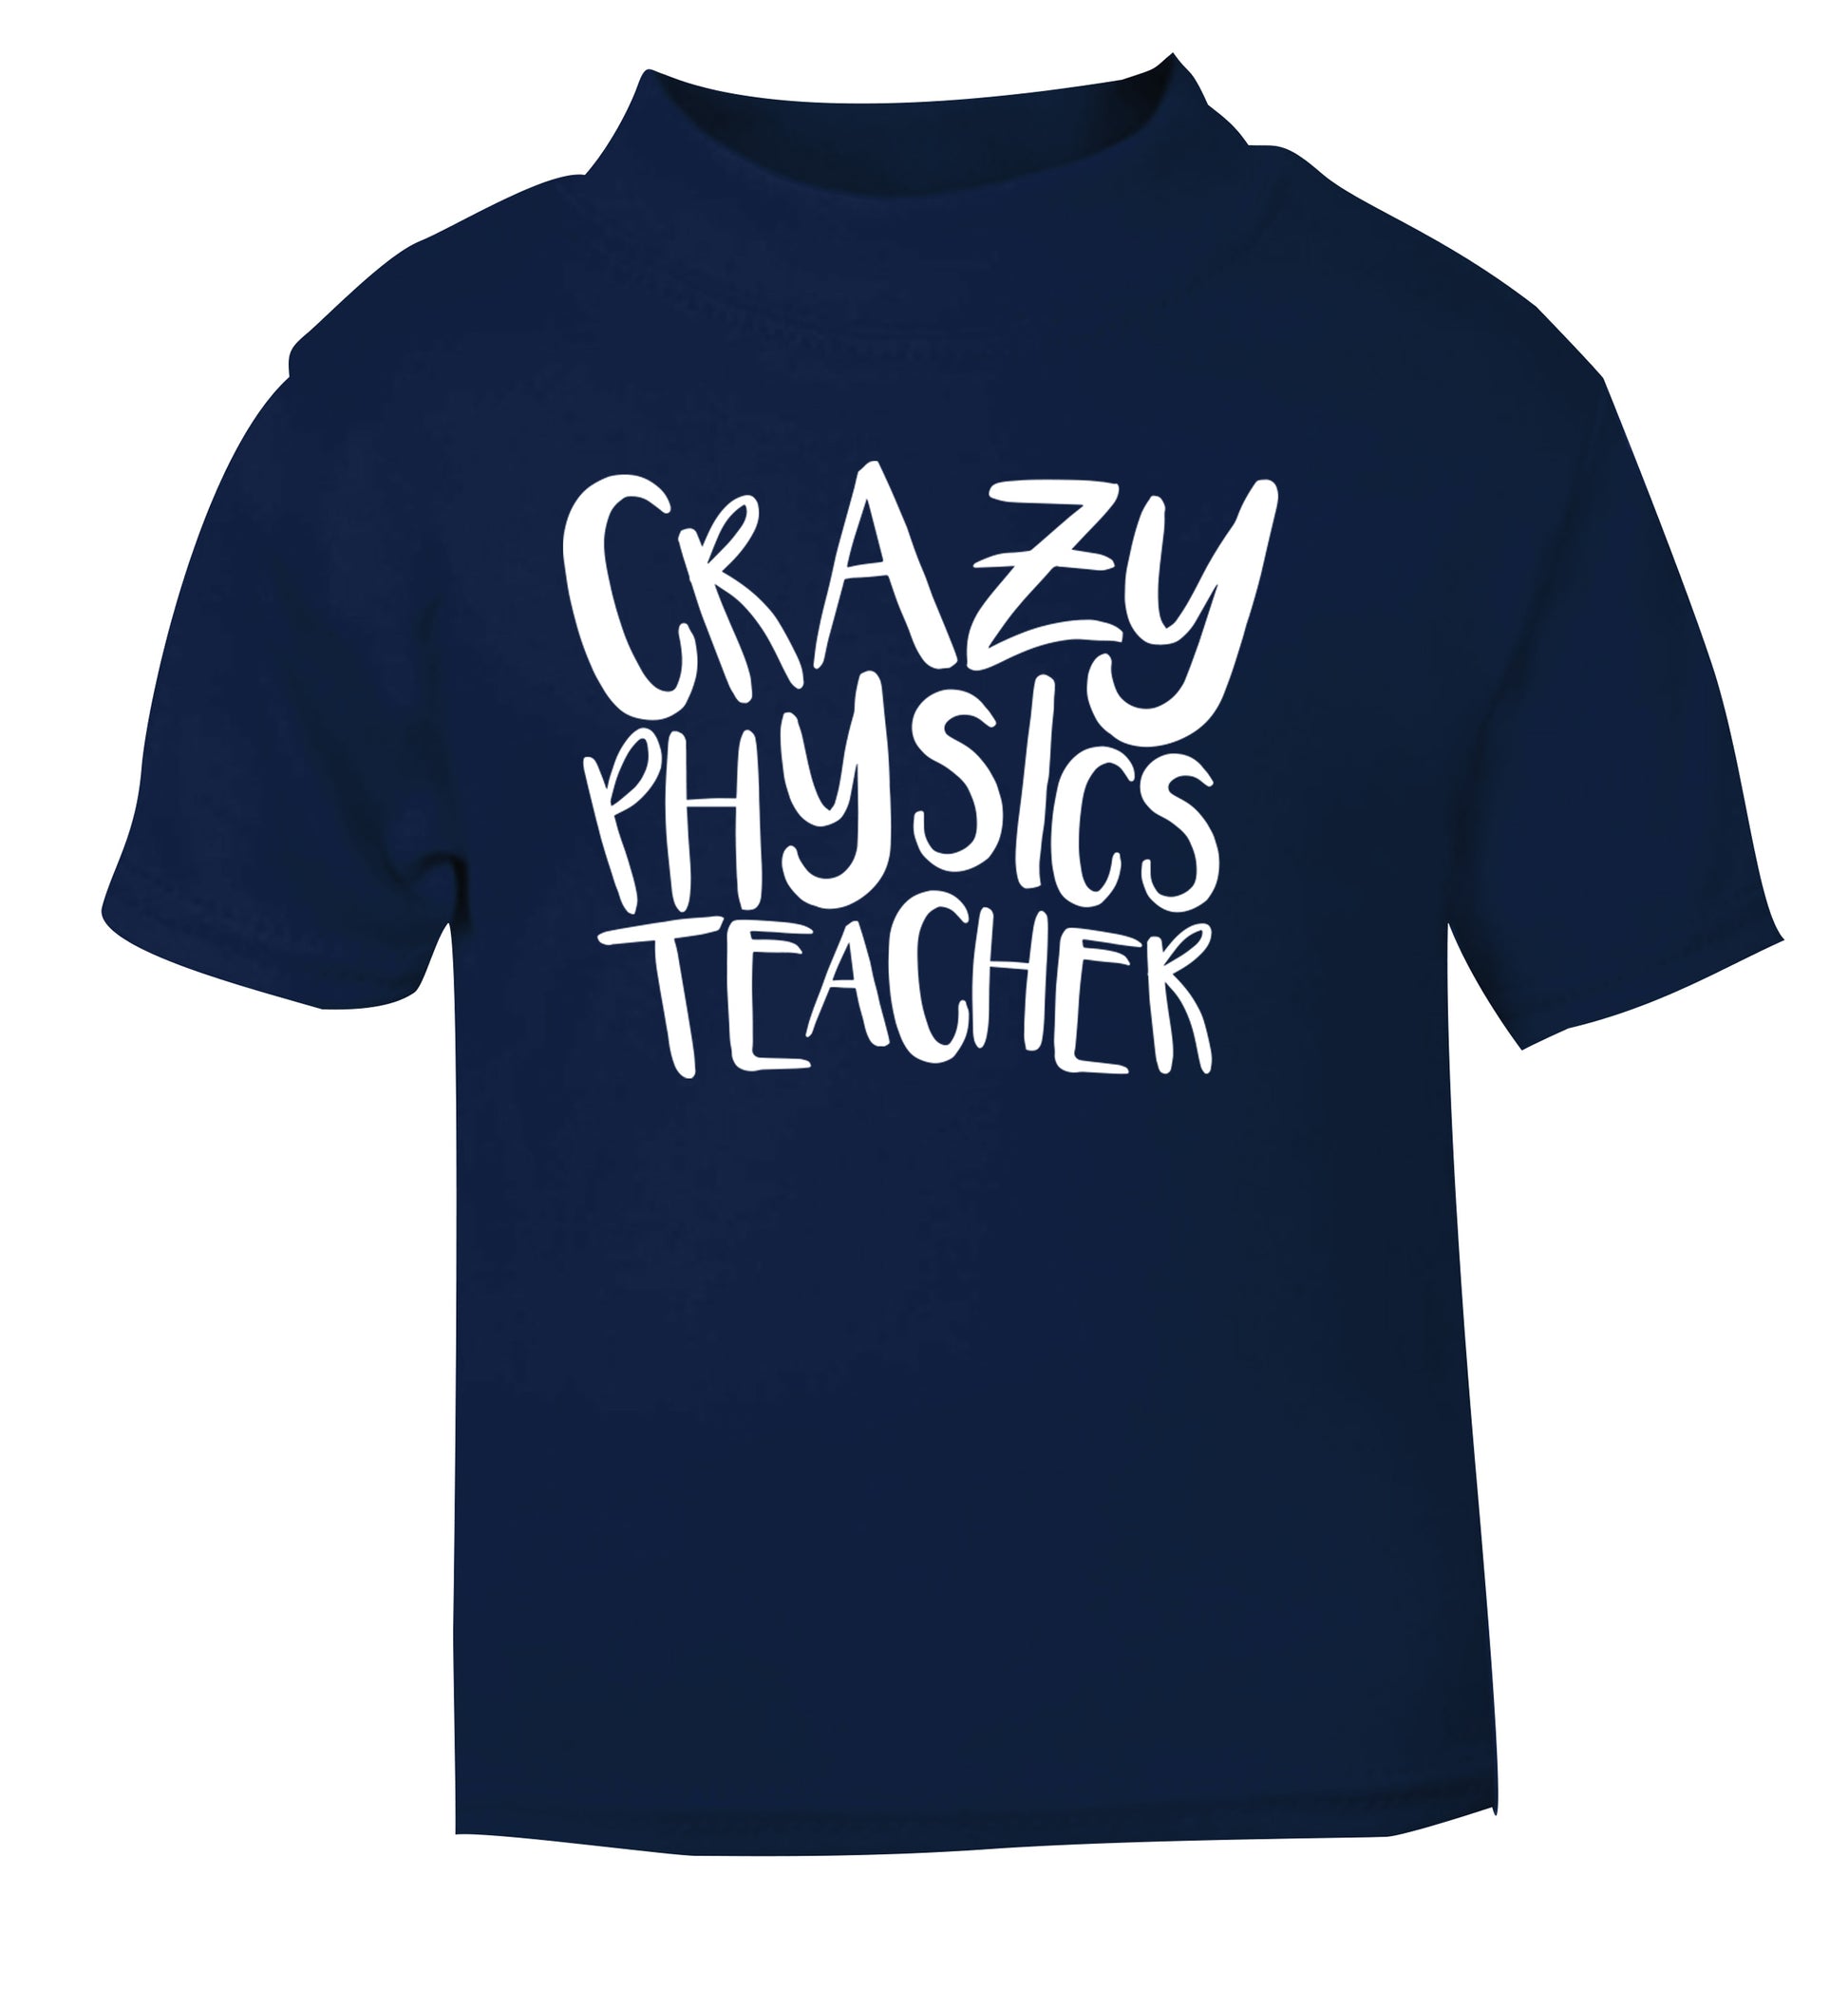 Crazy physics teacher navy Baby Toddler Tshirt 2 Years